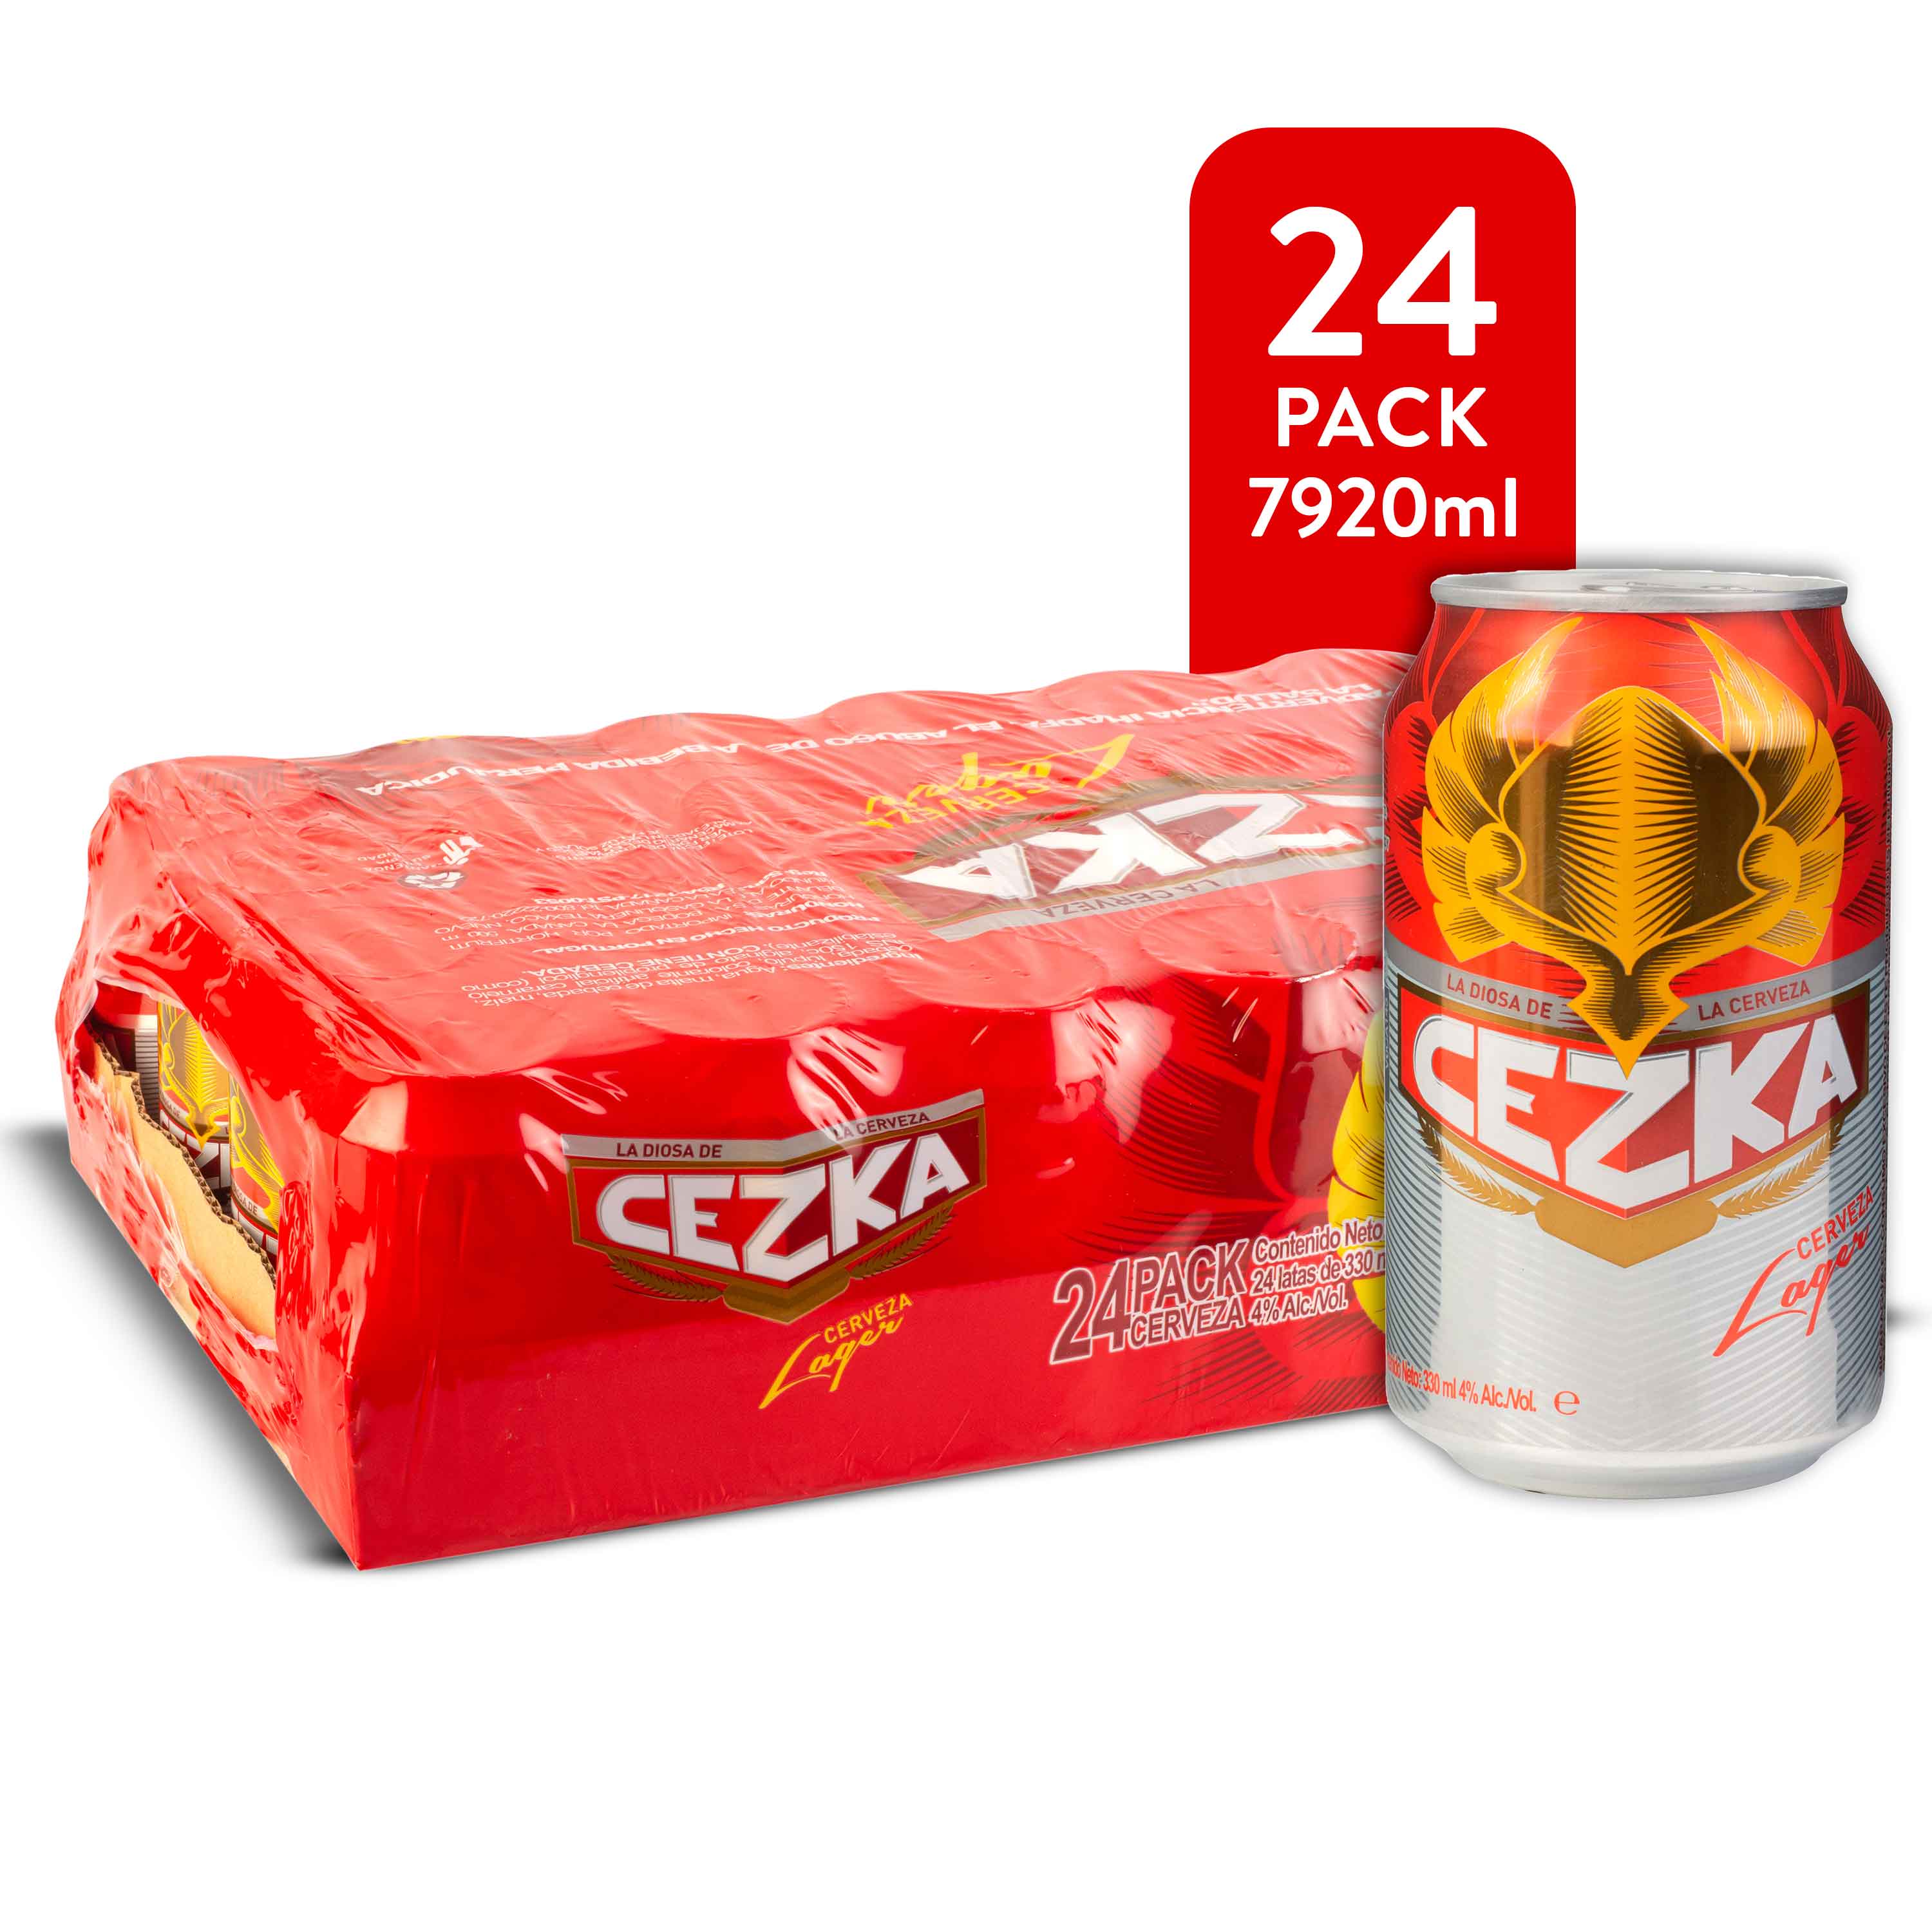 24-Pack-Cerveza-Cezka-Lager-4-Alcohol-7920ml-1-8379